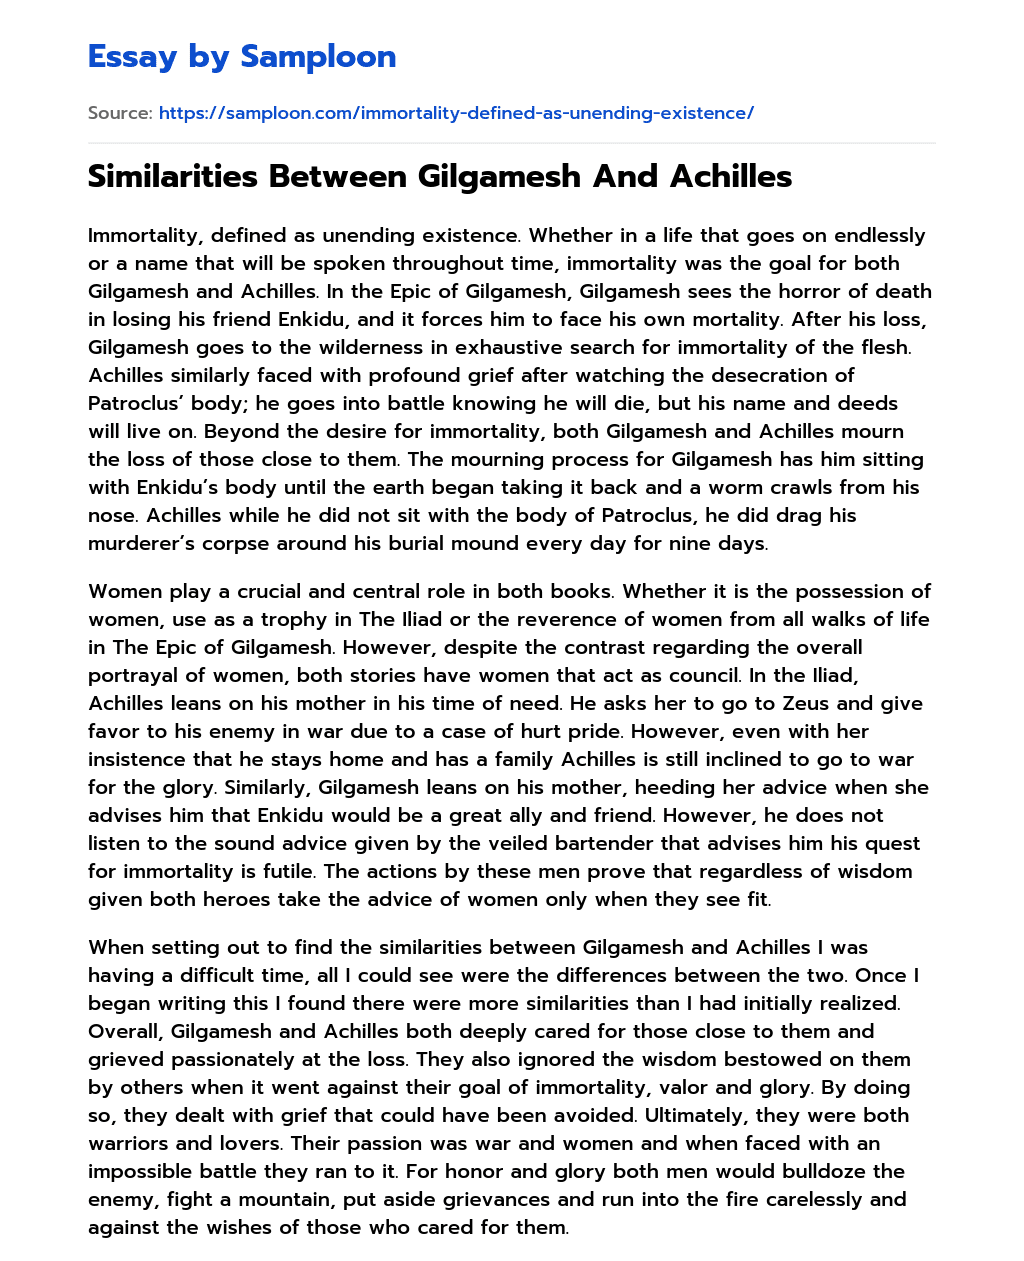 Similarities Between Gilgamesh And Achilles essay